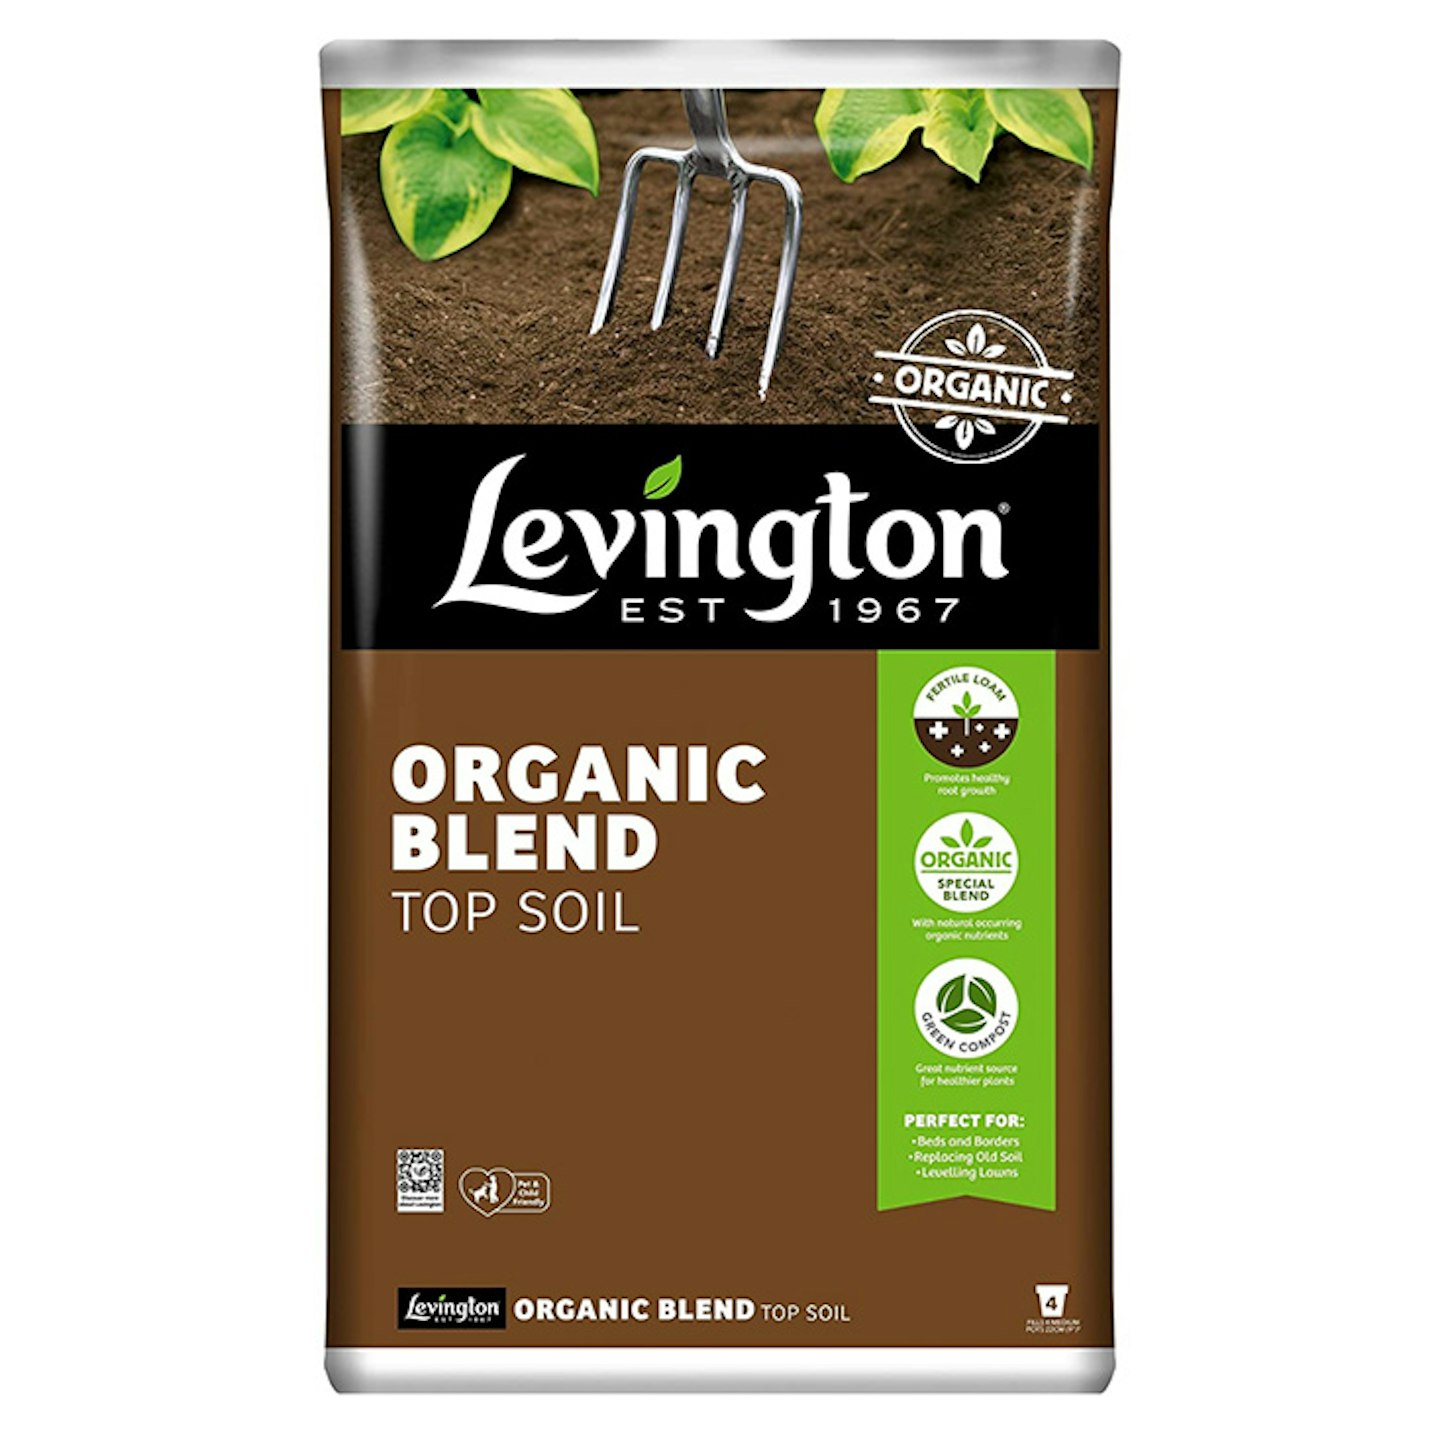 Levington Organic Blend Top Soil